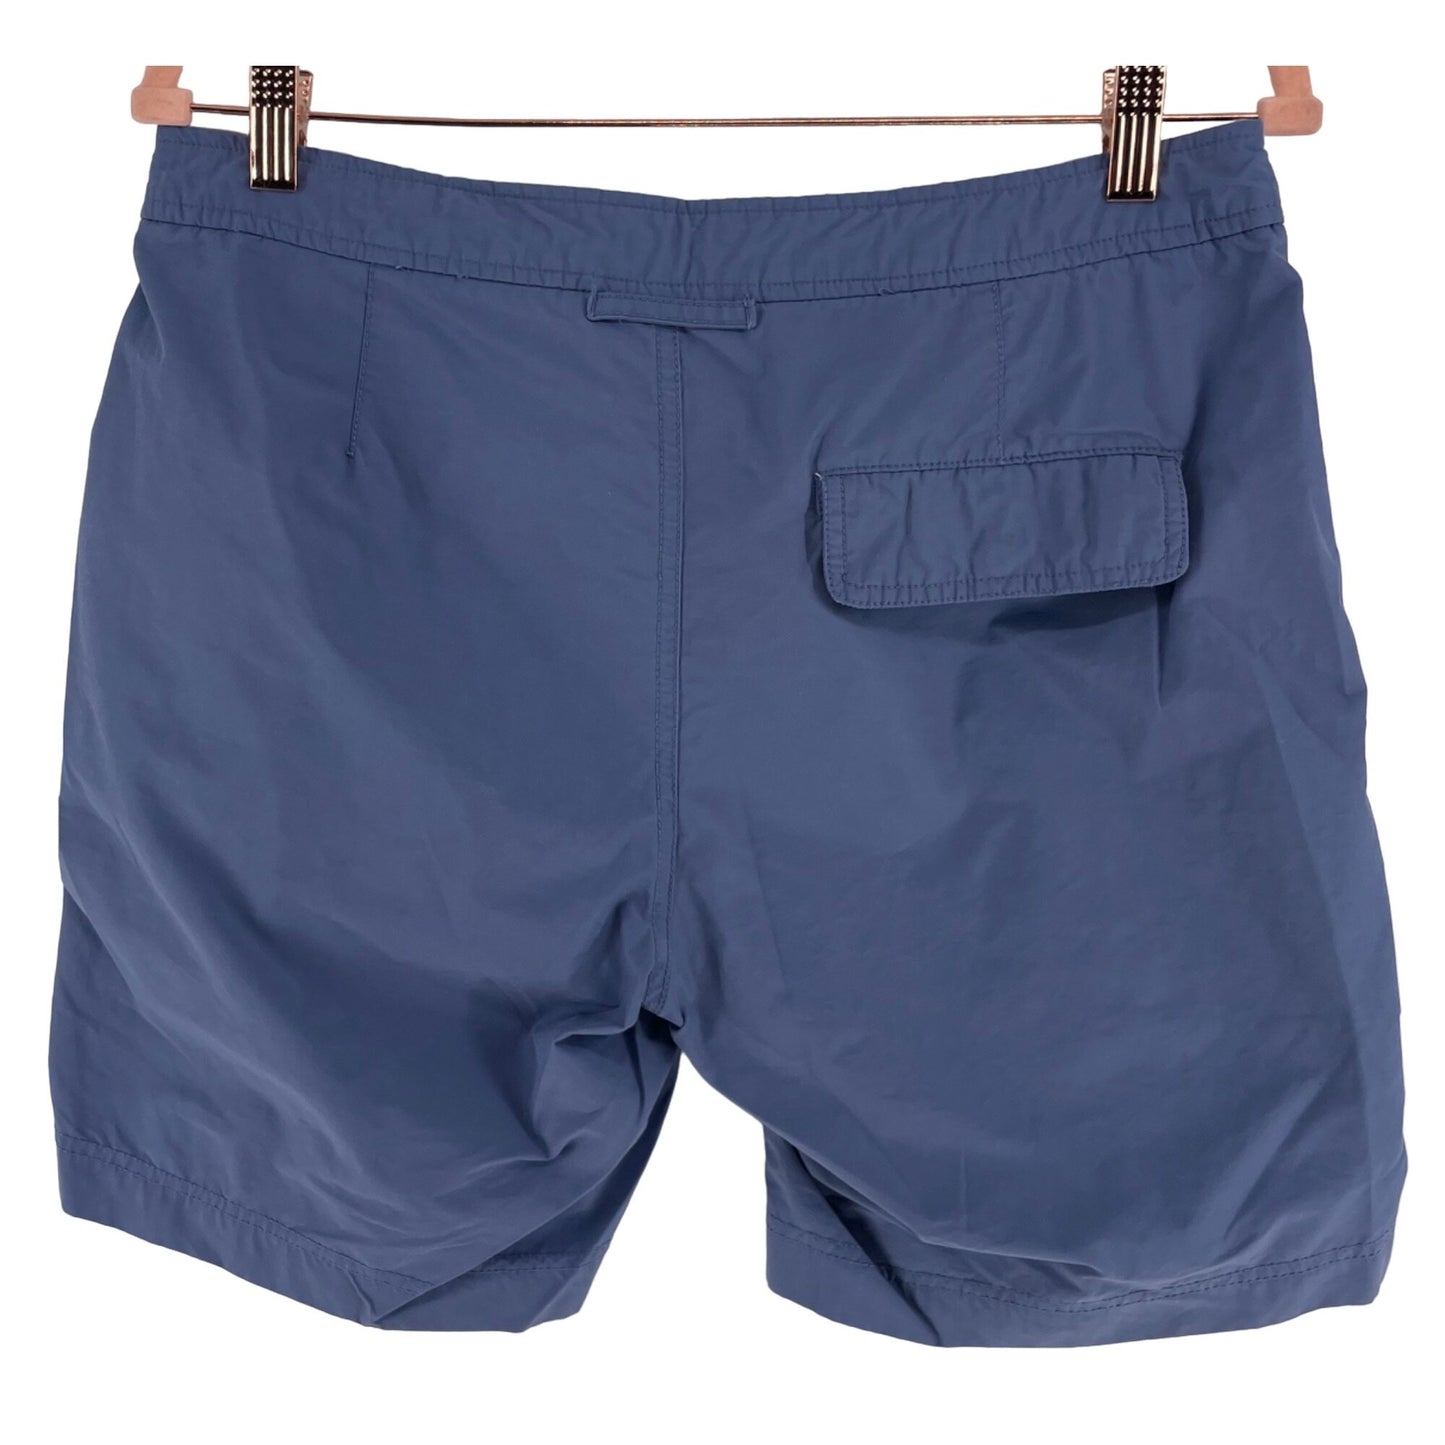 Onia Men's Size 32 (XS) The Calder Bluish Periwinkle Swim Shorts